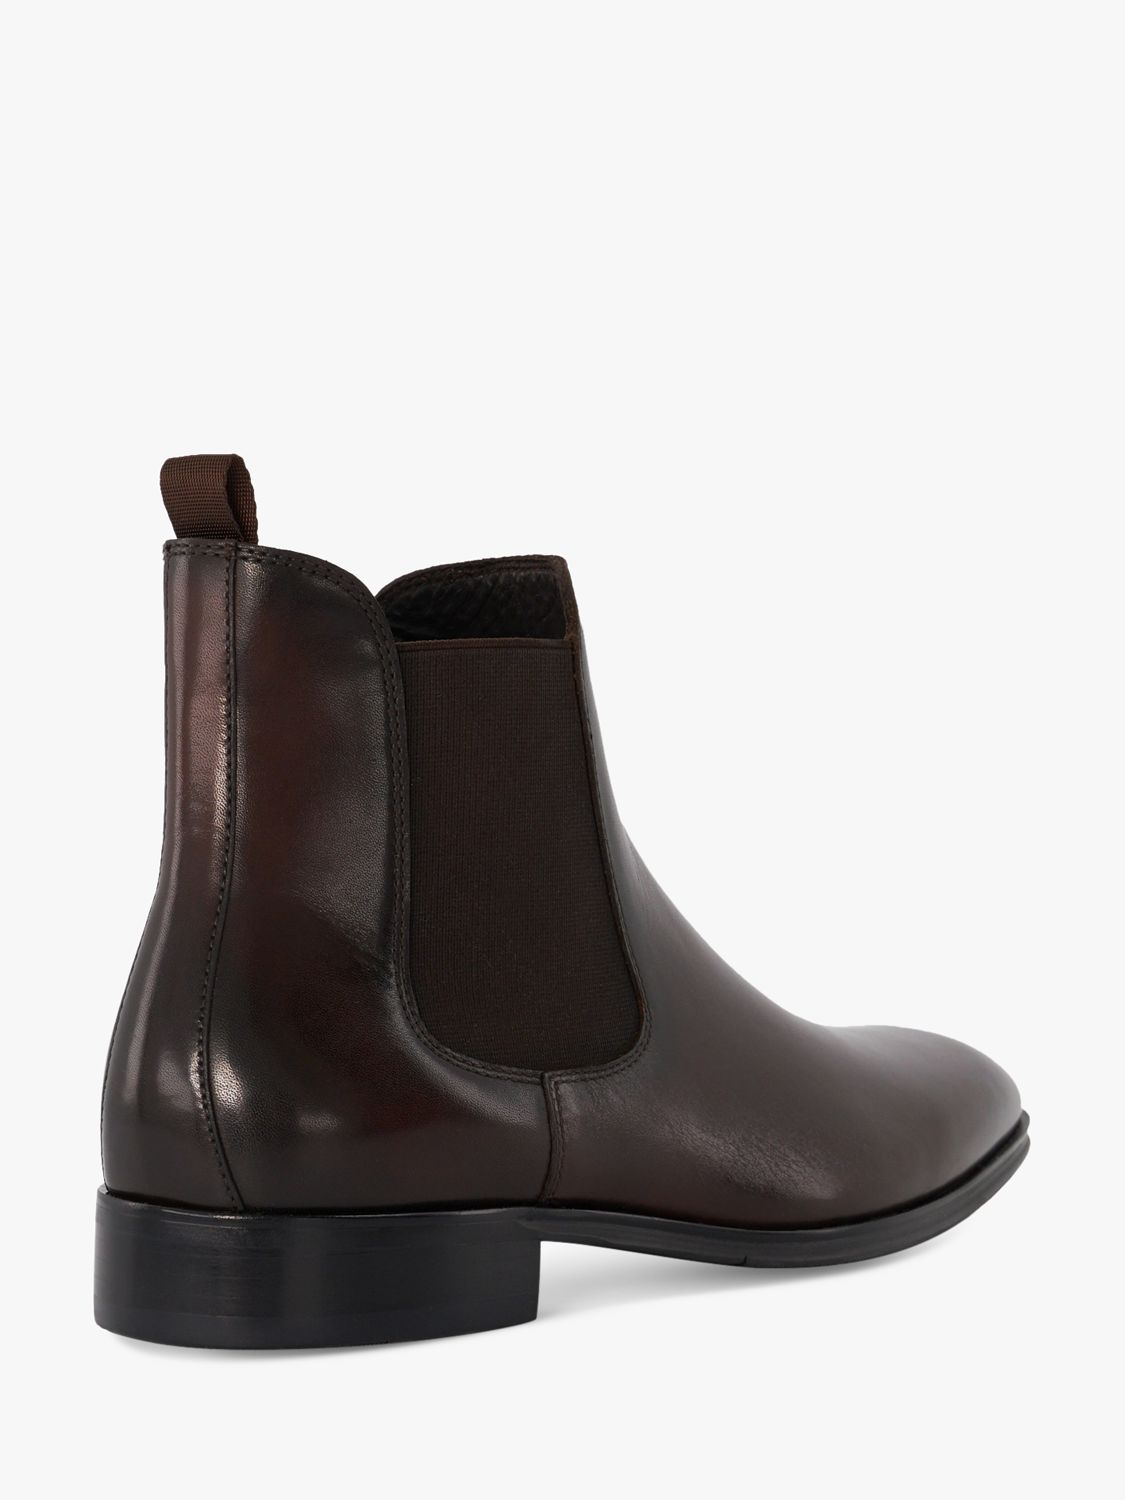 Dune Mandatory Leather Chelsea Boots, Dark Brown, 6